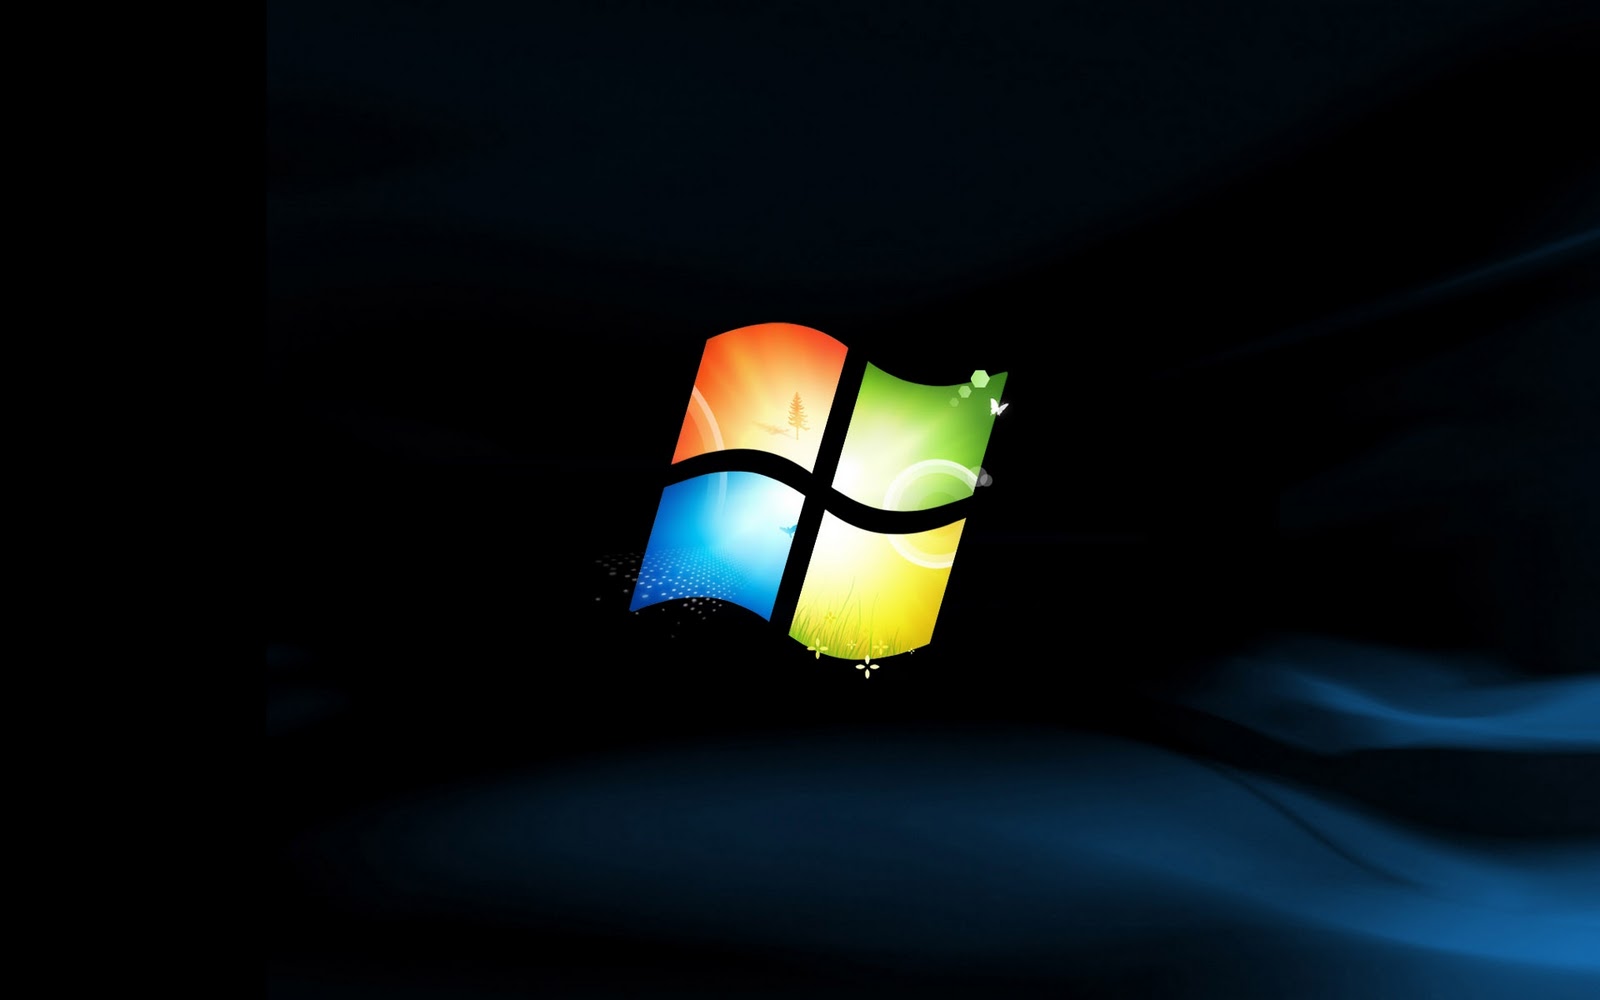 Windows 7 achtergronden windows 7 wallpapers 18jpg